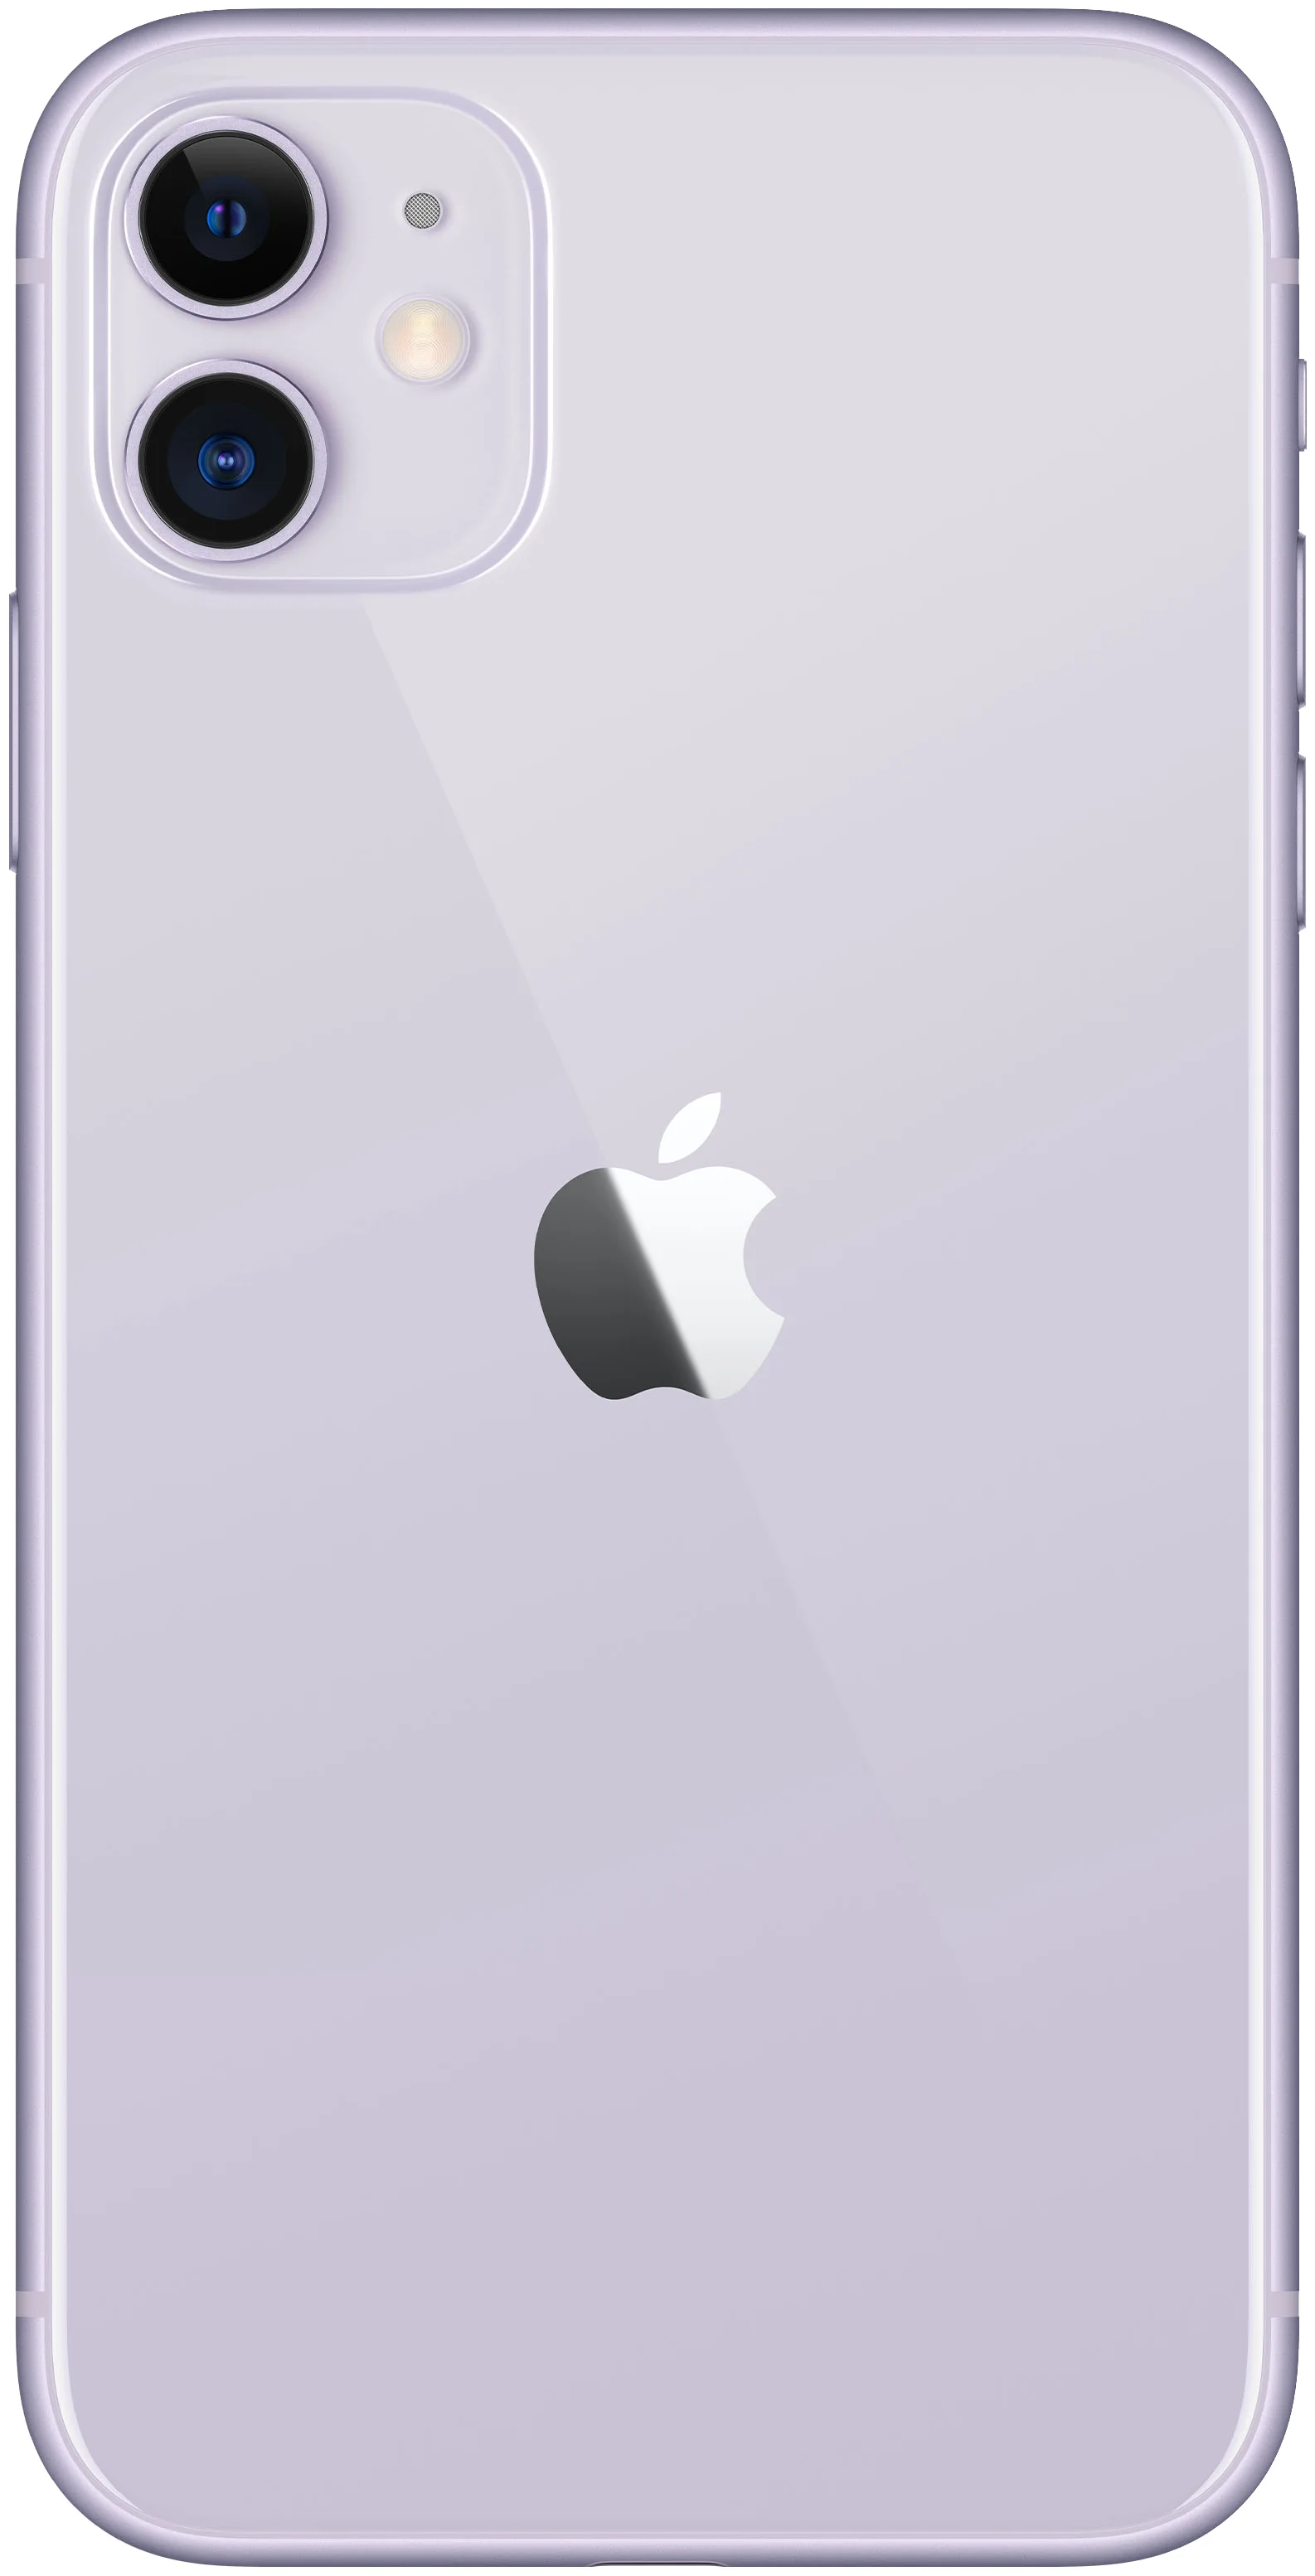 Apple iPhone 11 128GB - память: 128 ГБ